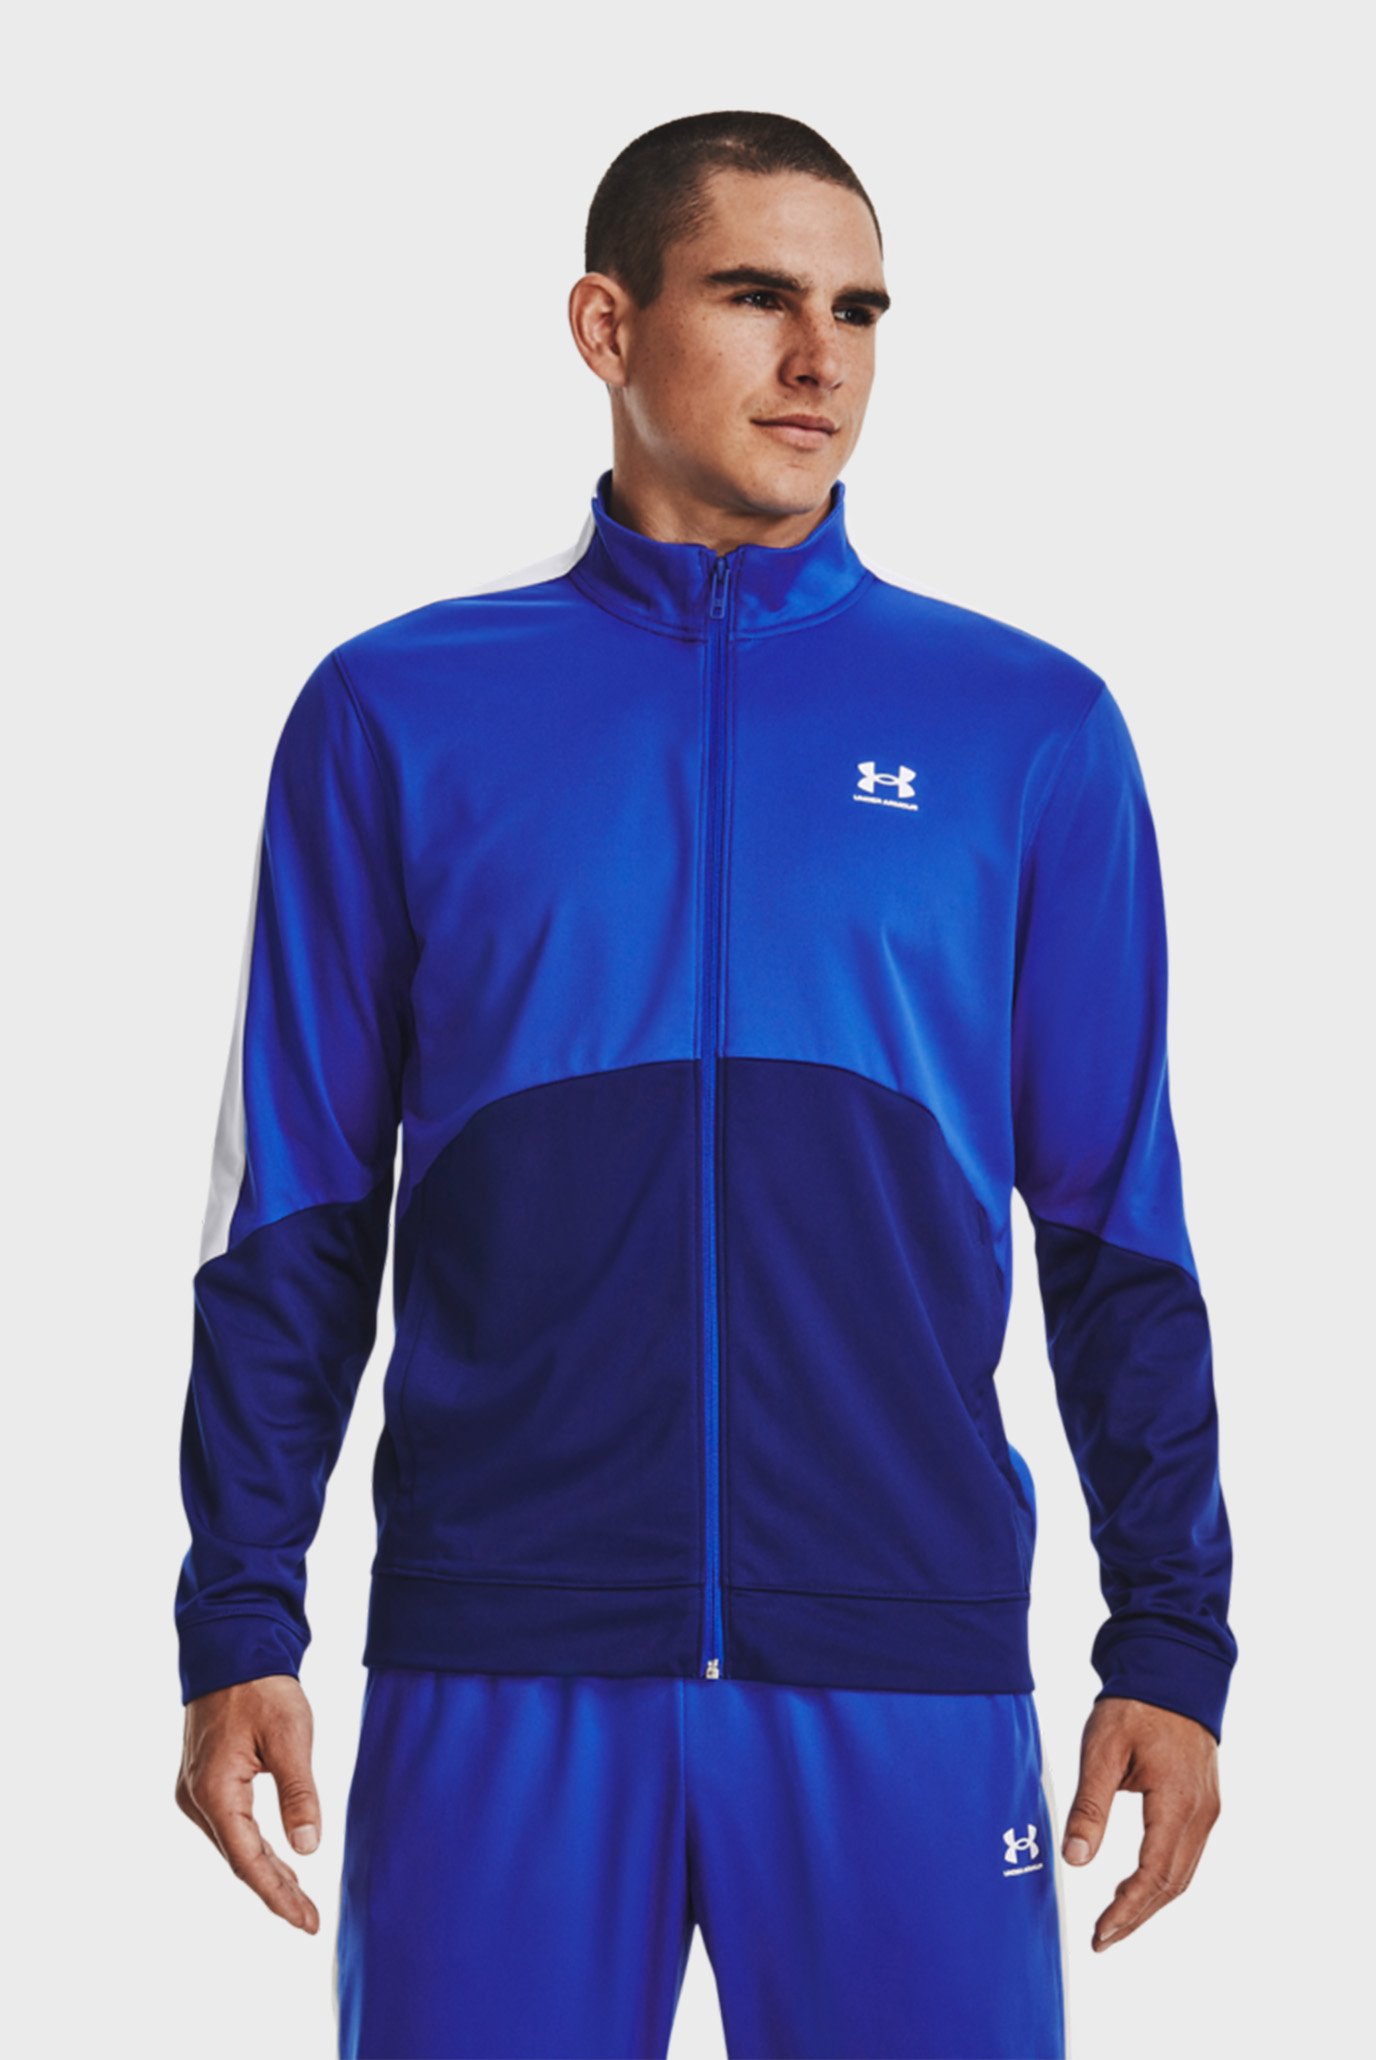 Чоловіча синя спортивна кофта Tricot Fashion Jacket-BLU 1